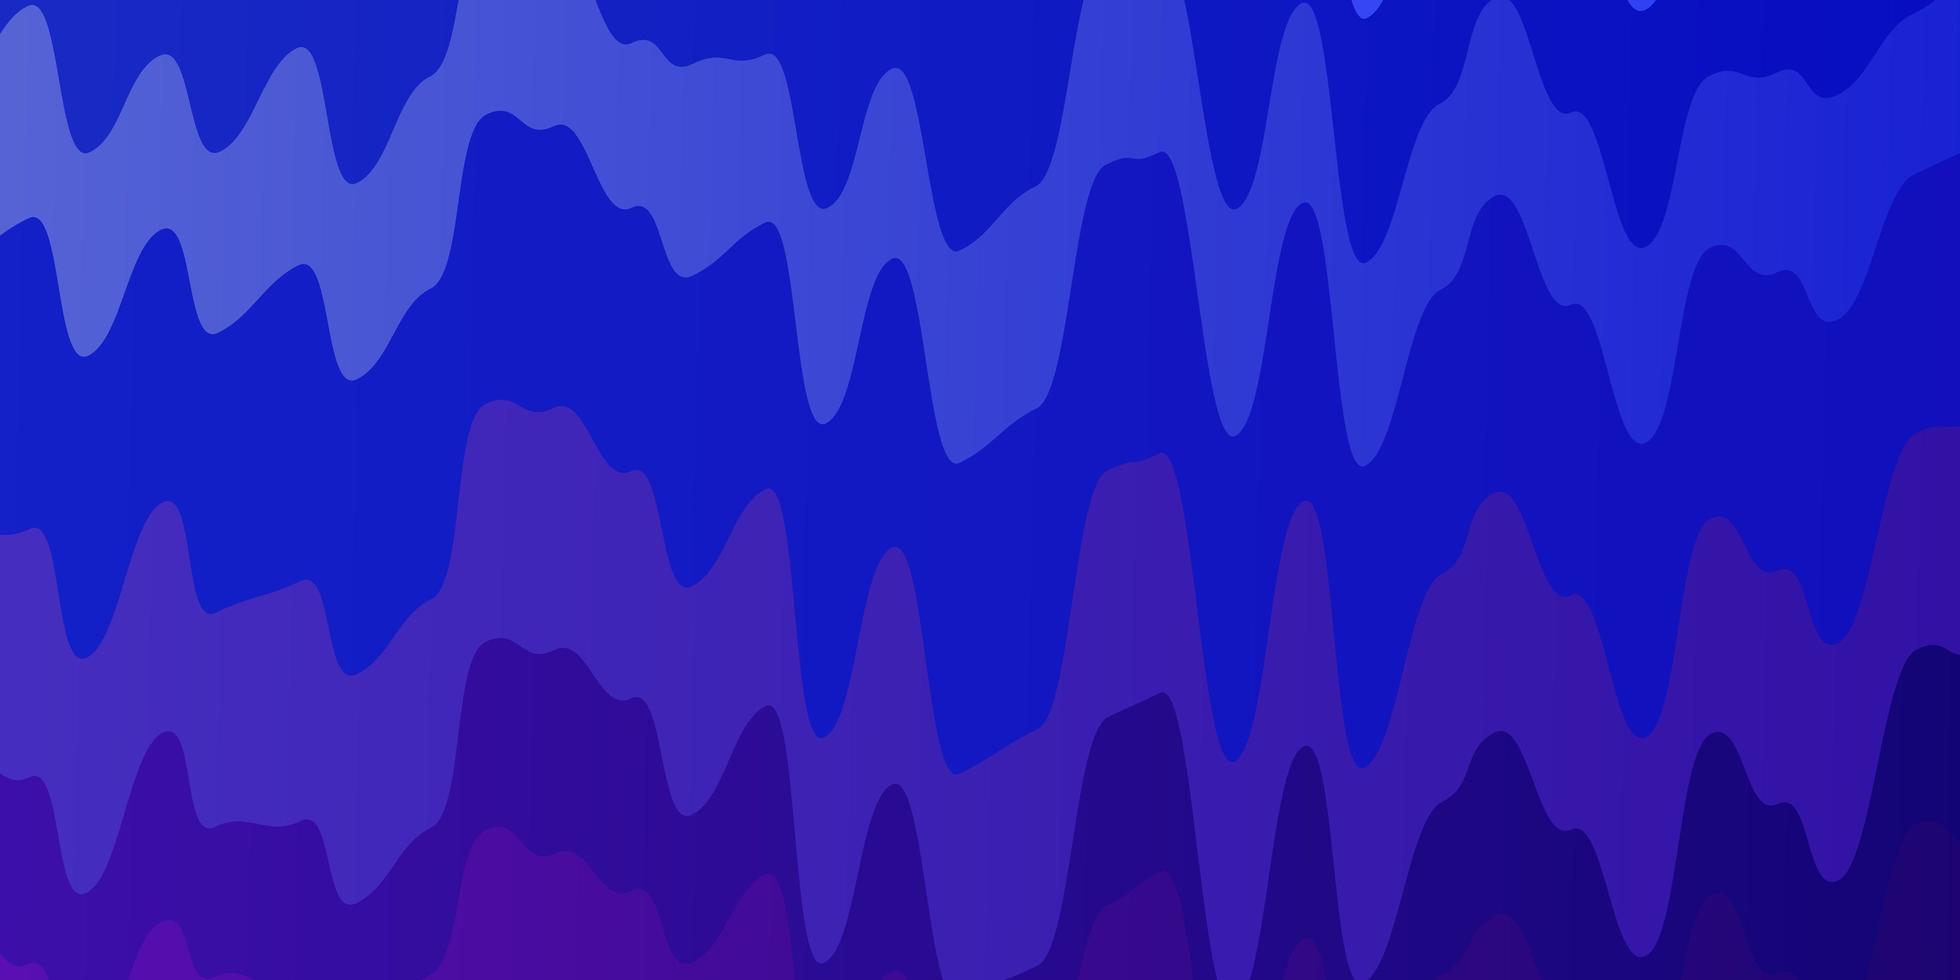 blauwe, paarse achtergrond met golvende lijnen. vector